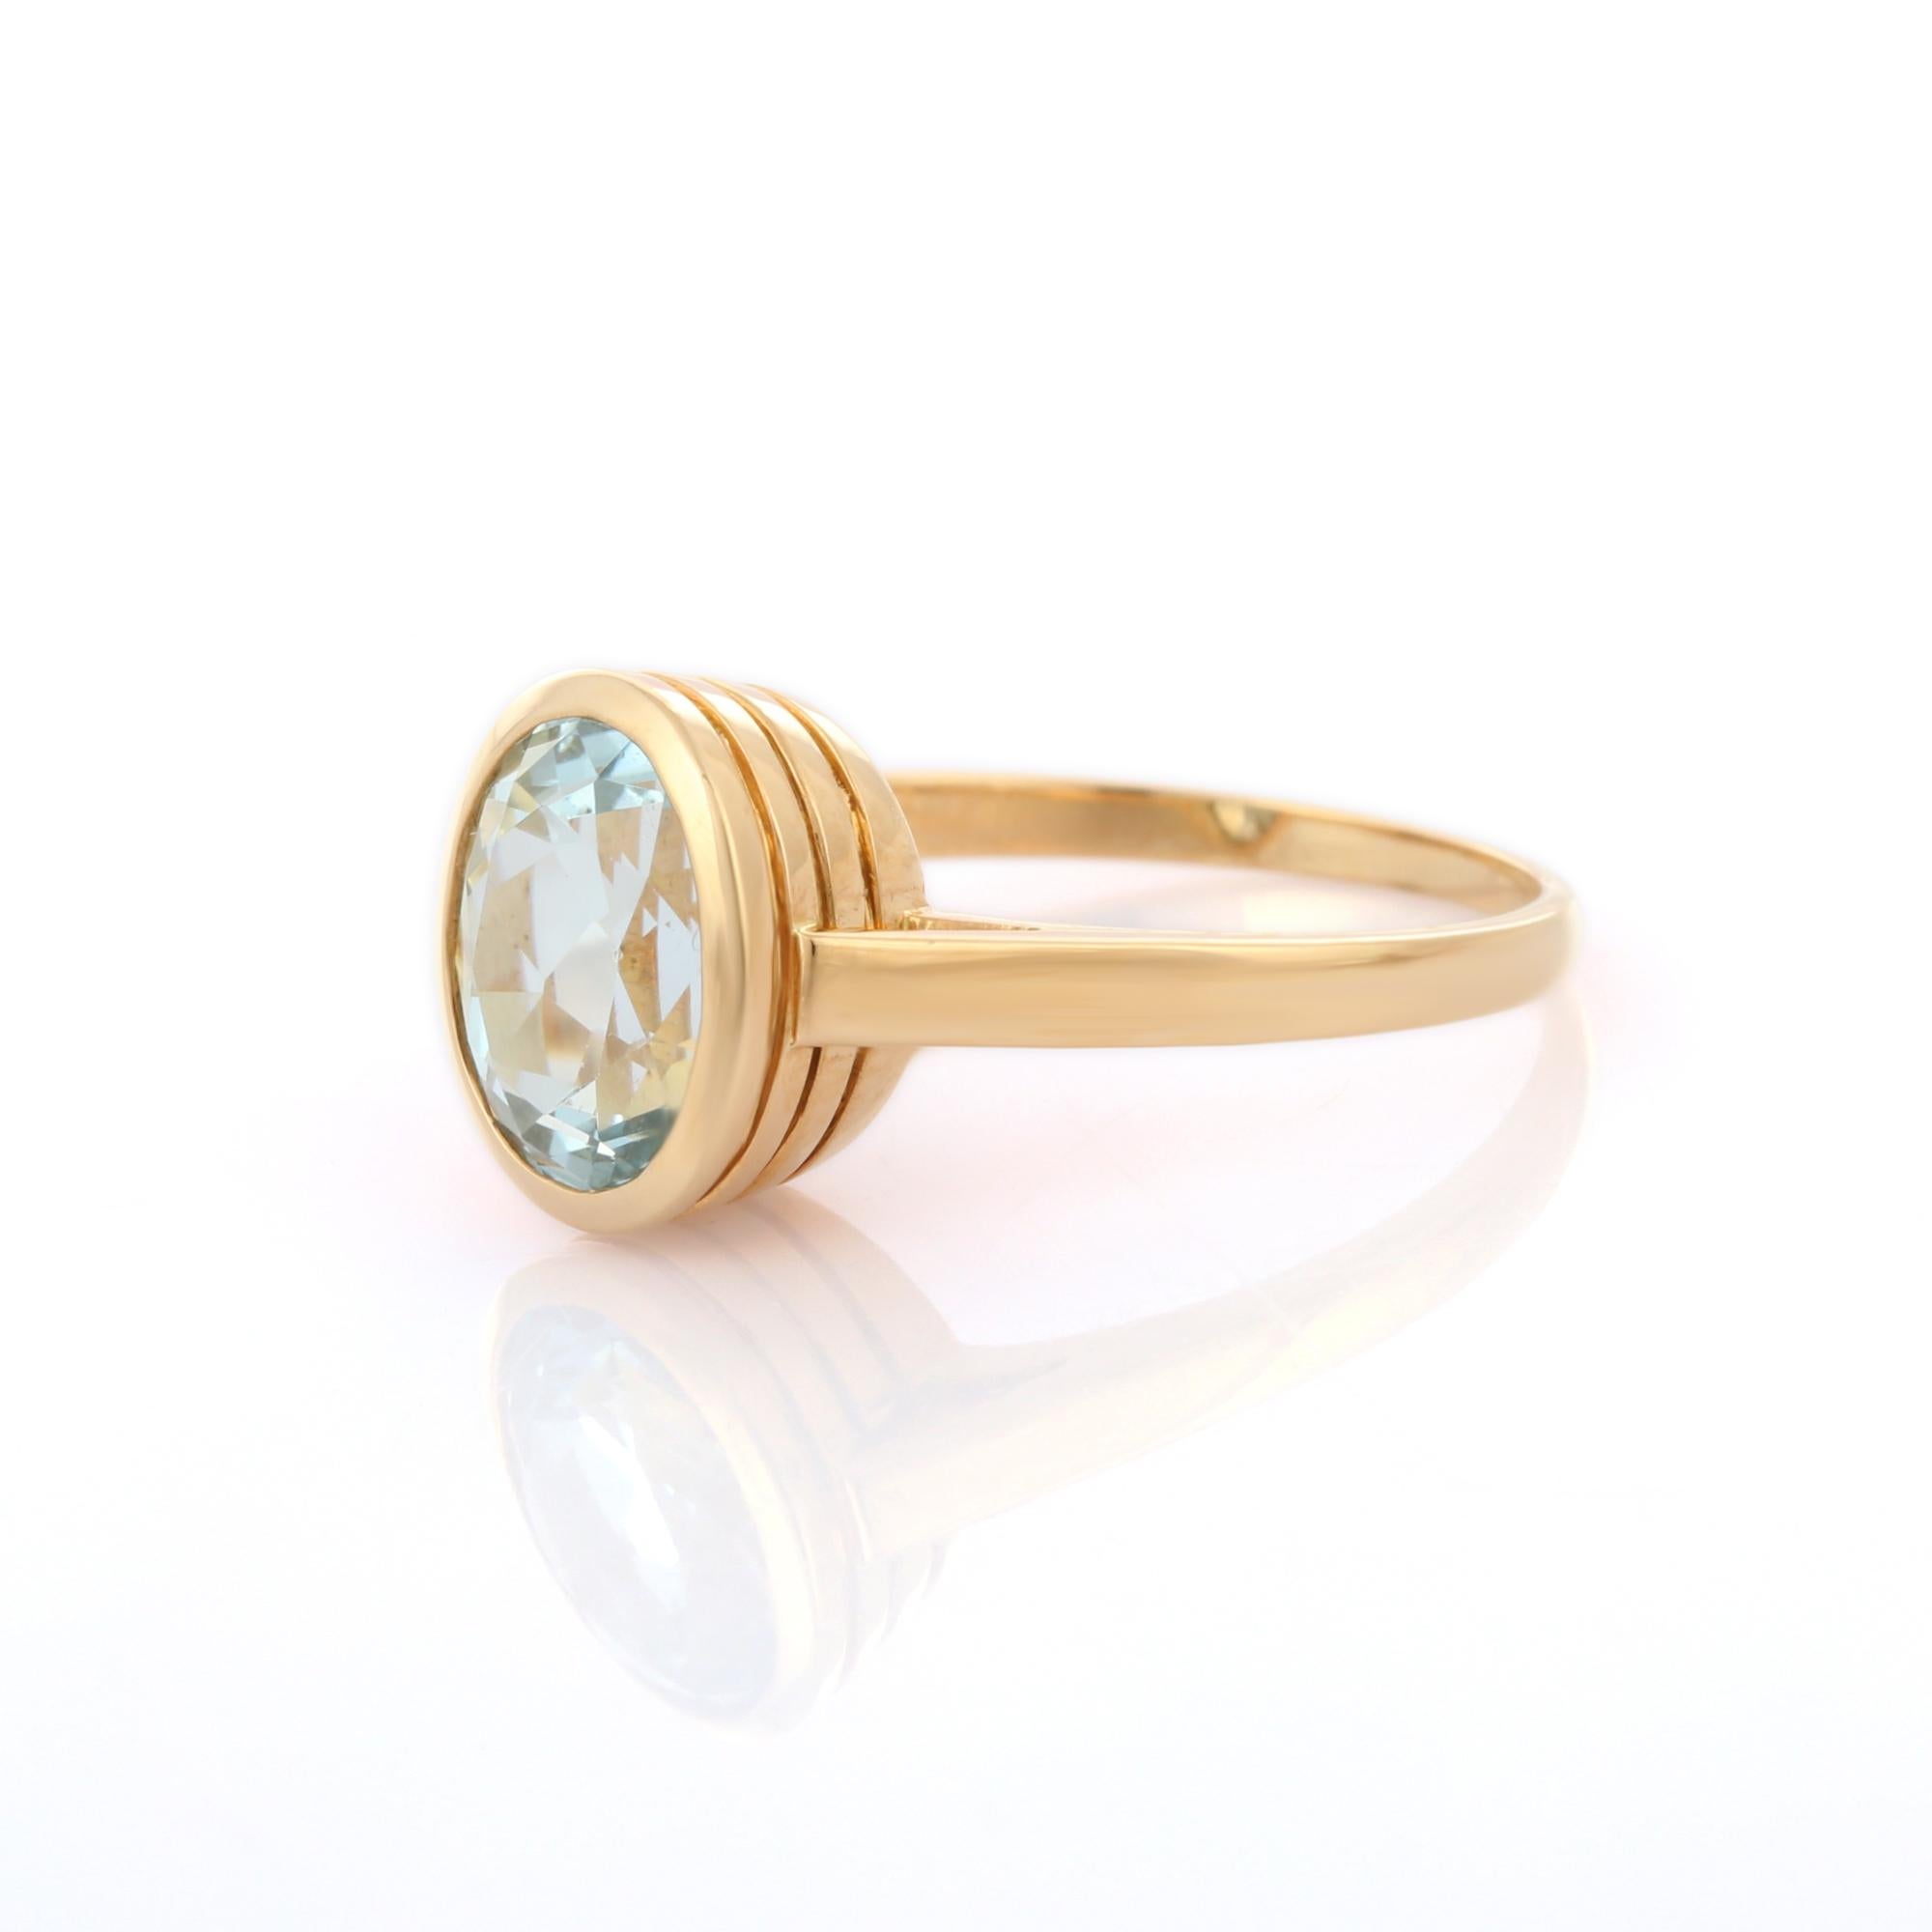 For Sale:  18K Solid Yellow Gold 2.55 ct Oval Cut Aquamarine Gemstone Ring, Aquamarine Ring 3